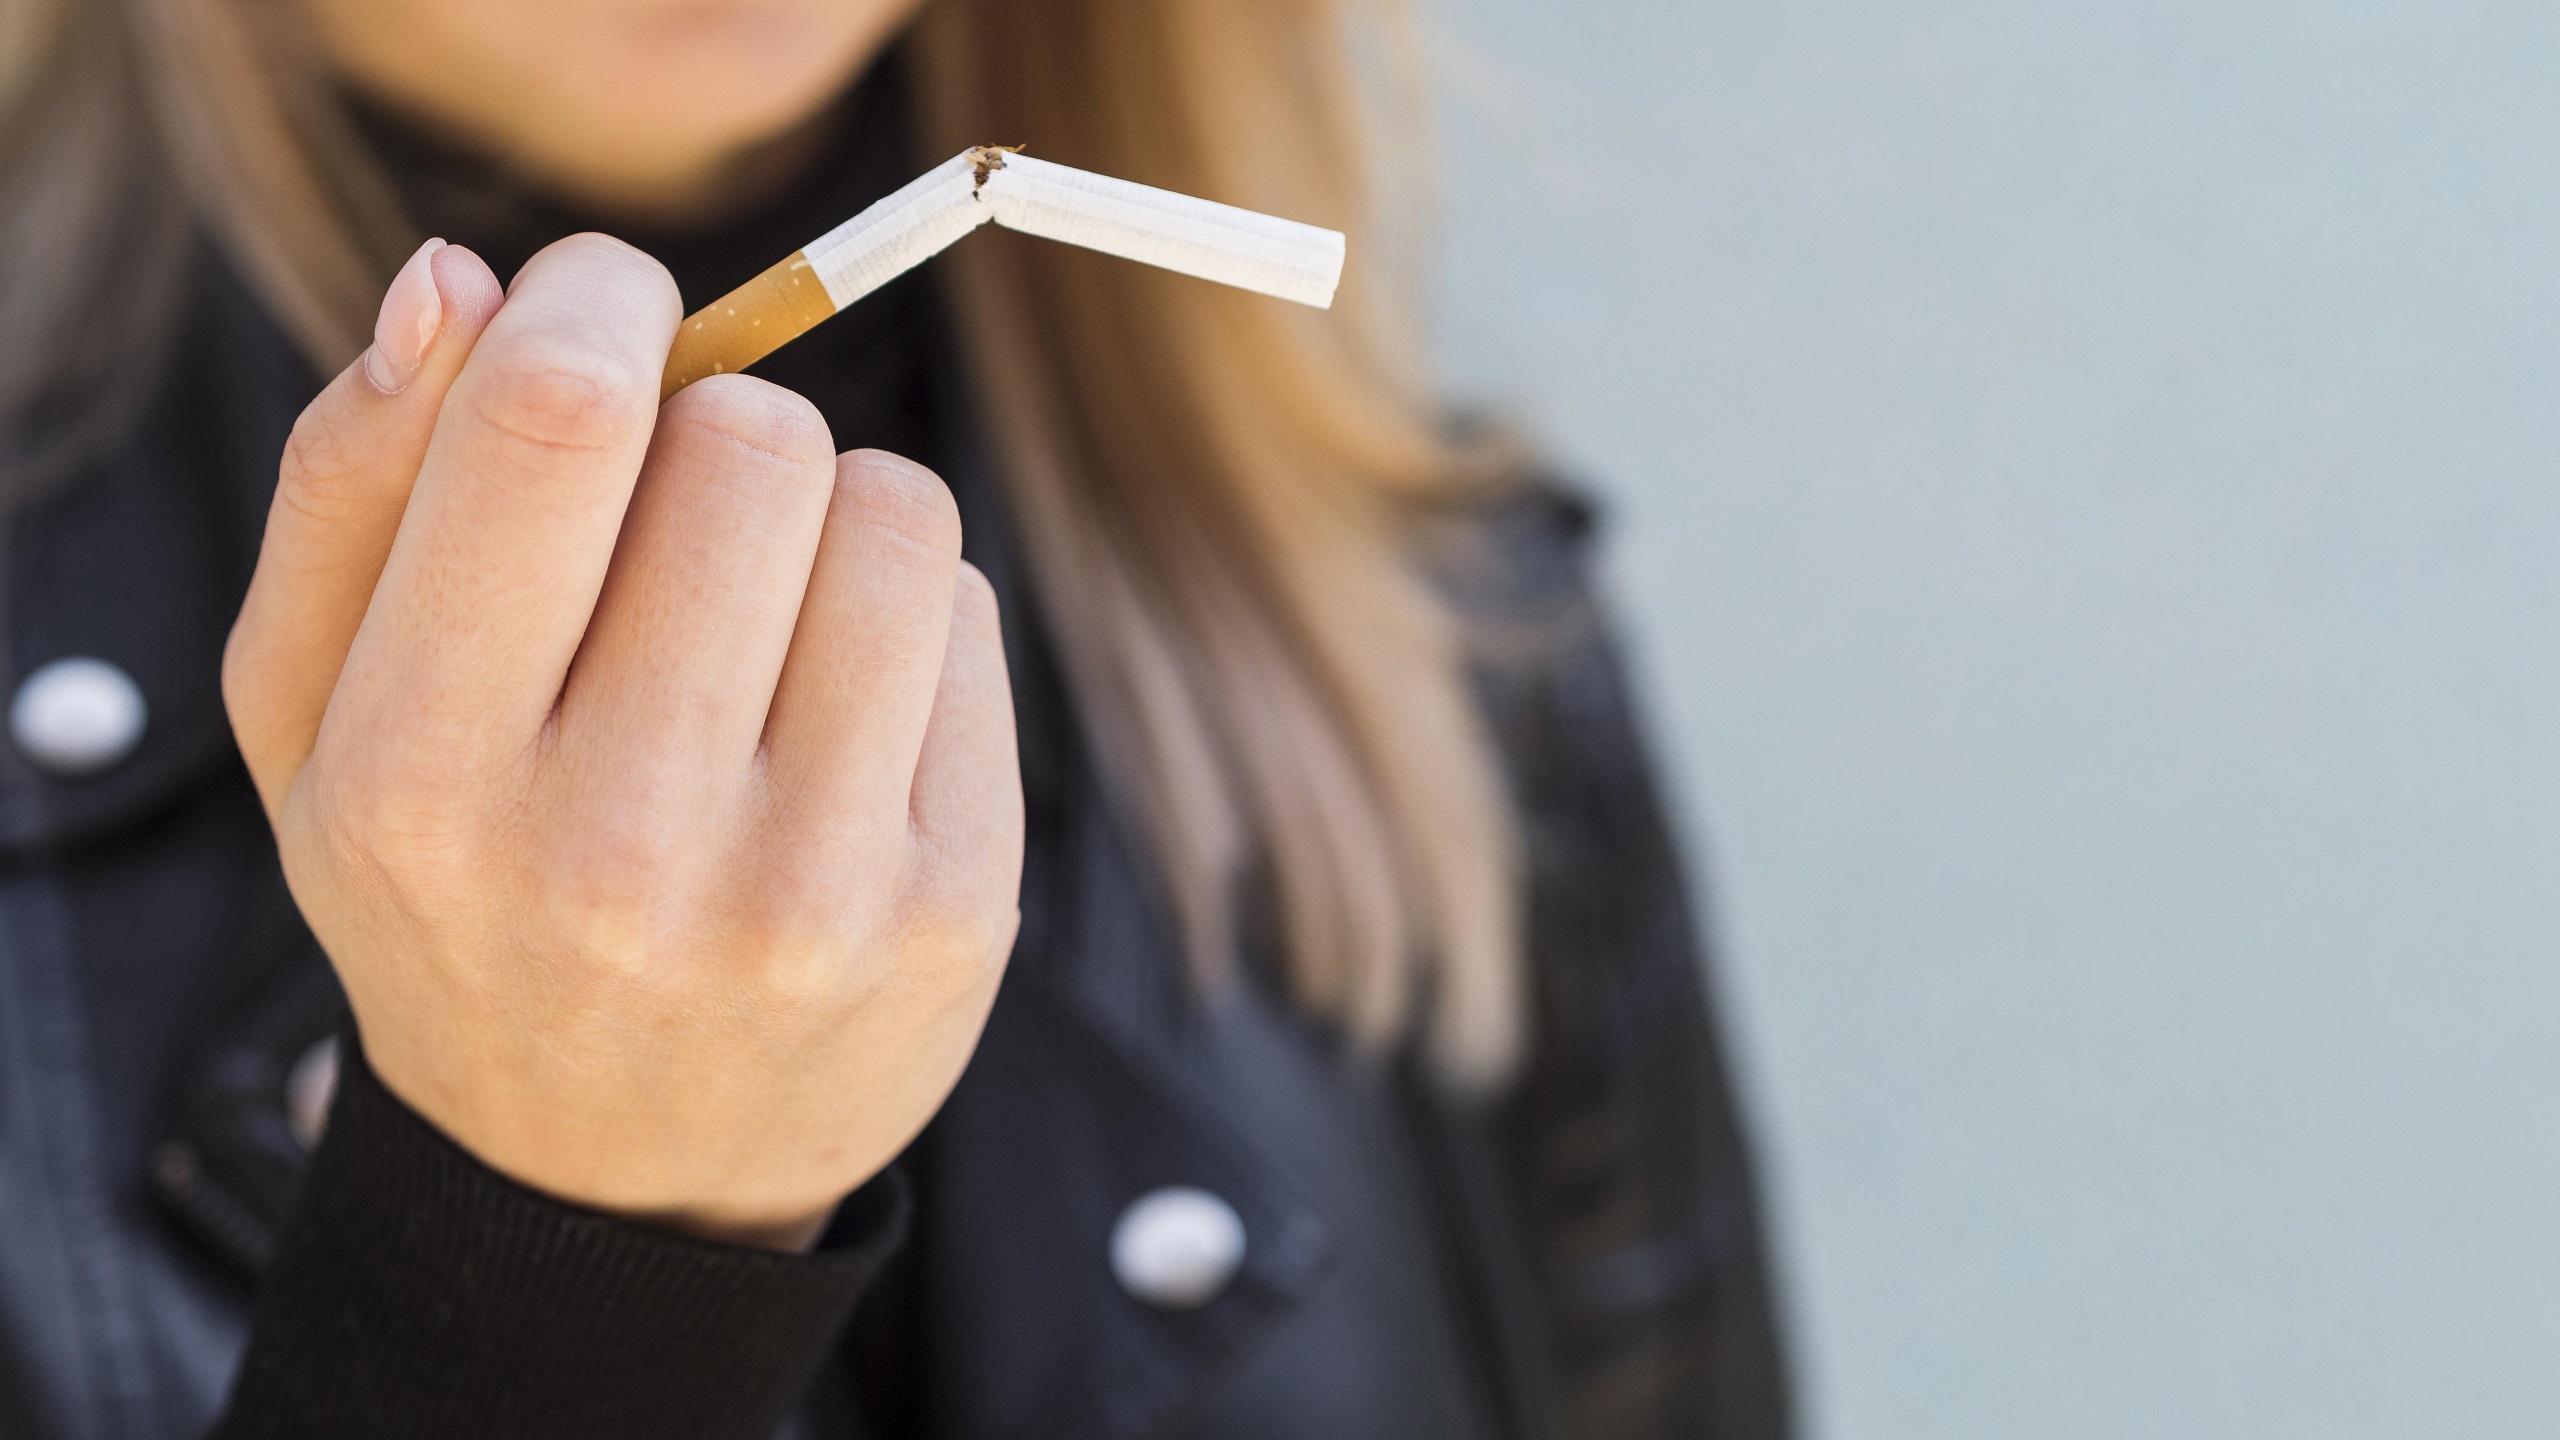 Smoking Kills 8,000 Israelis Every Year: Health Ministry